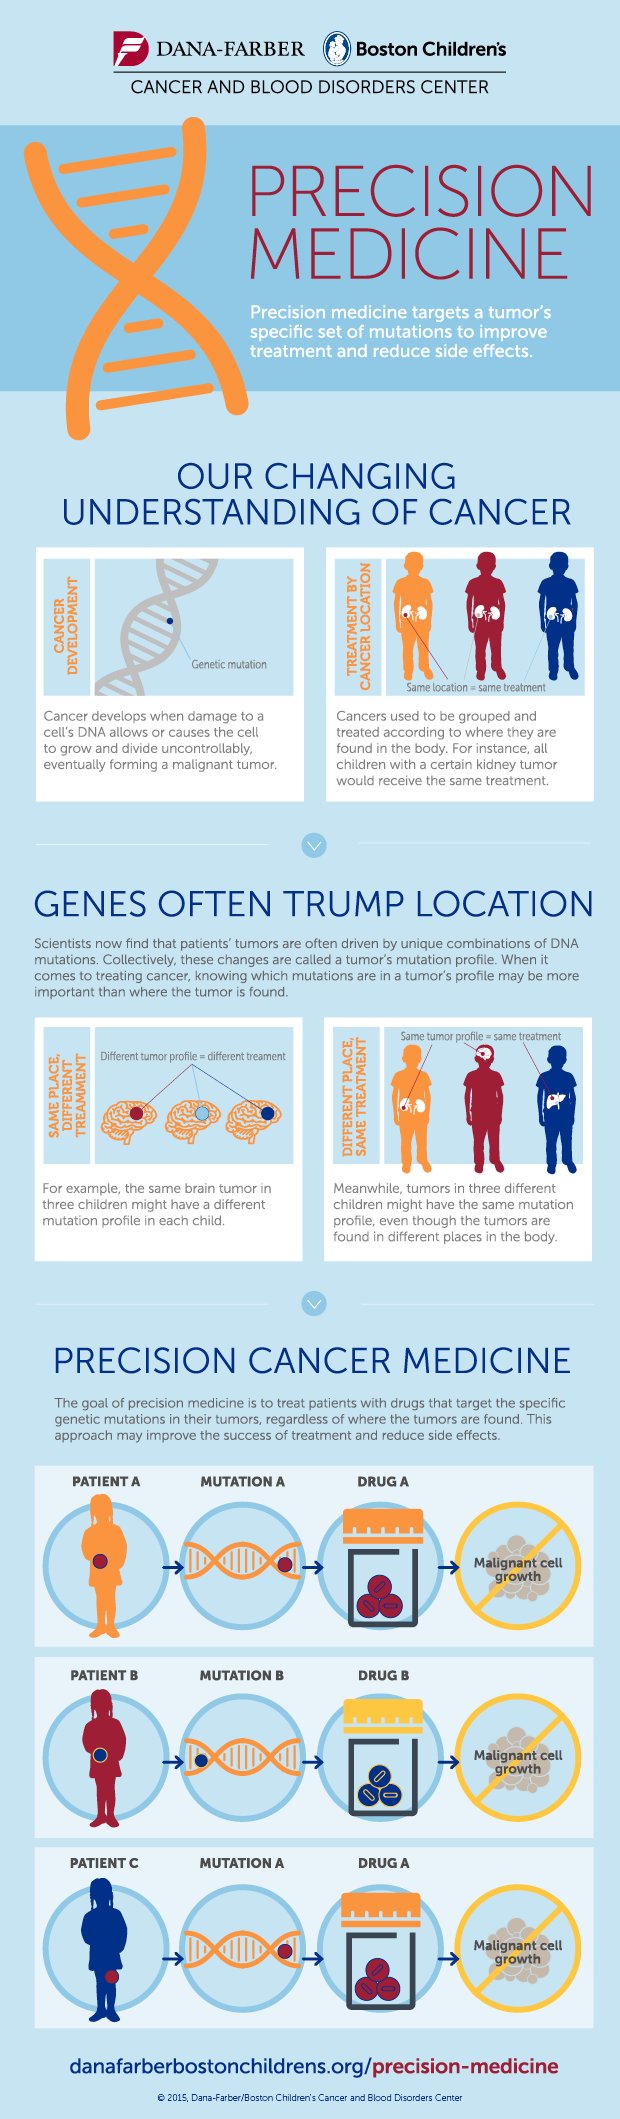 precision-cancer-medicine-infographic